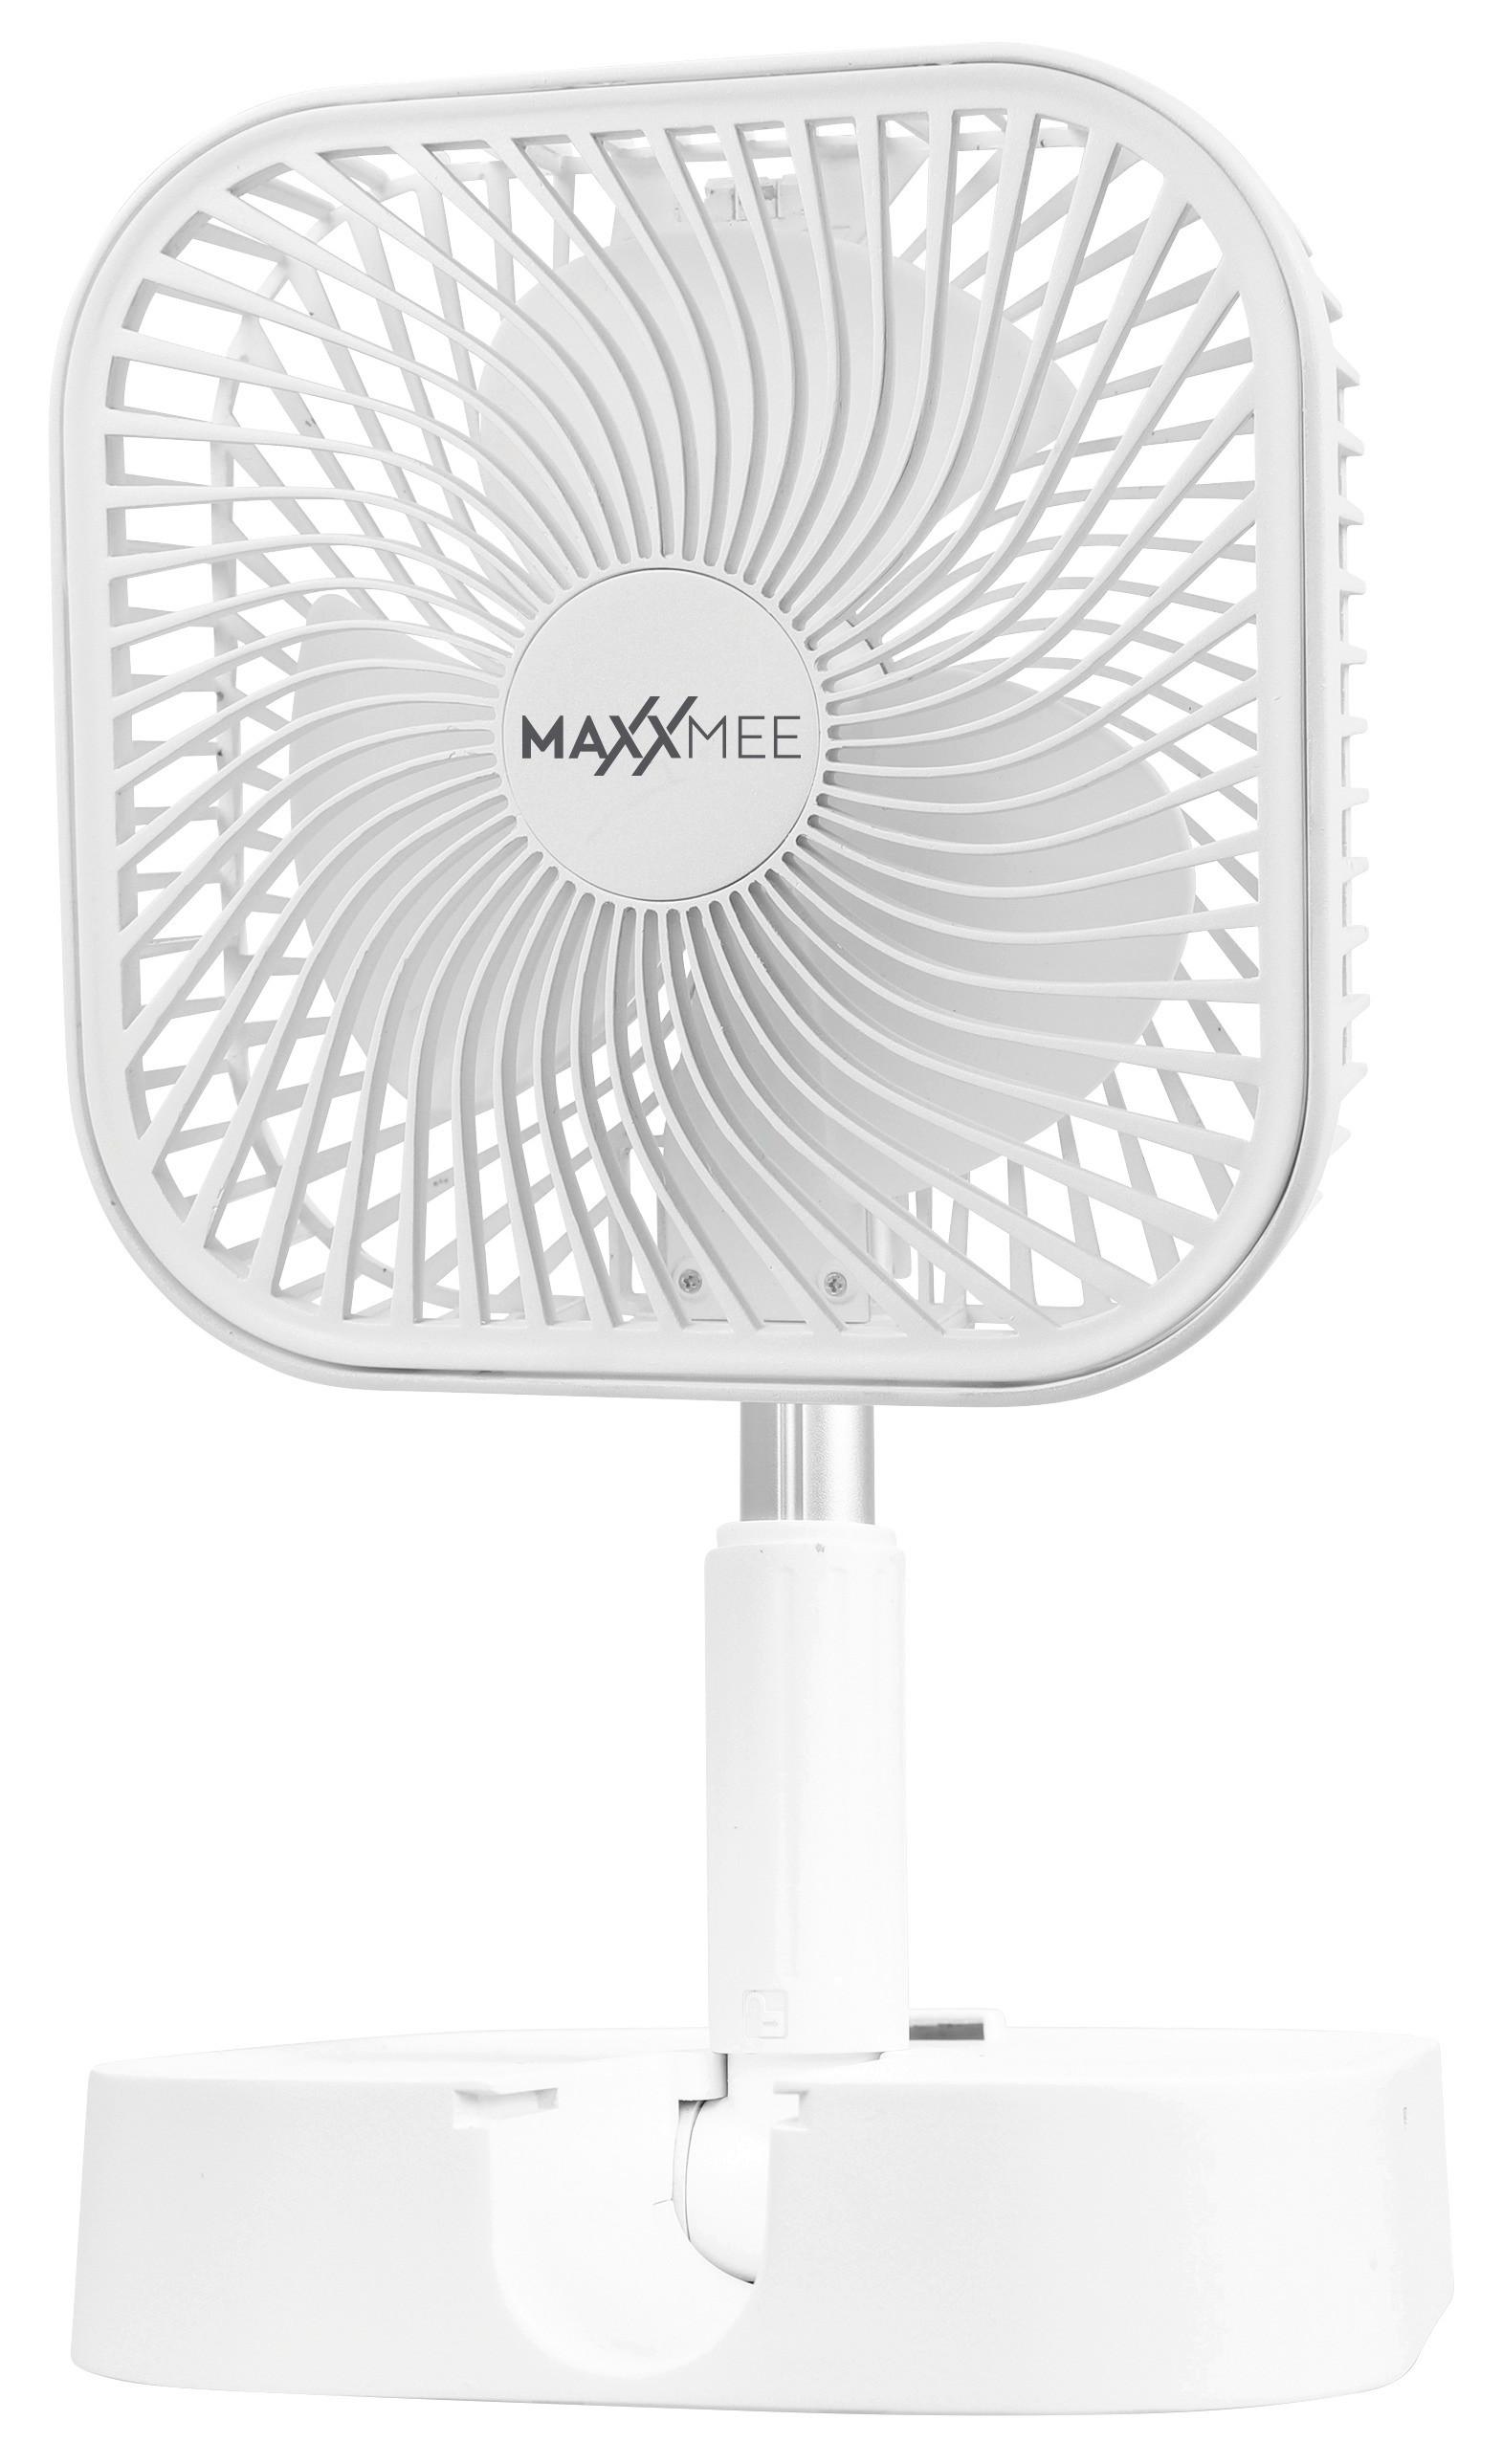 Akku-Ventilator 1,3-4,8 W Maxxmee H: 19,7 cm - Weiß, Basics, Kunststoff/Metall (19,7/19,7/9,3cm) - TV - Unser Original